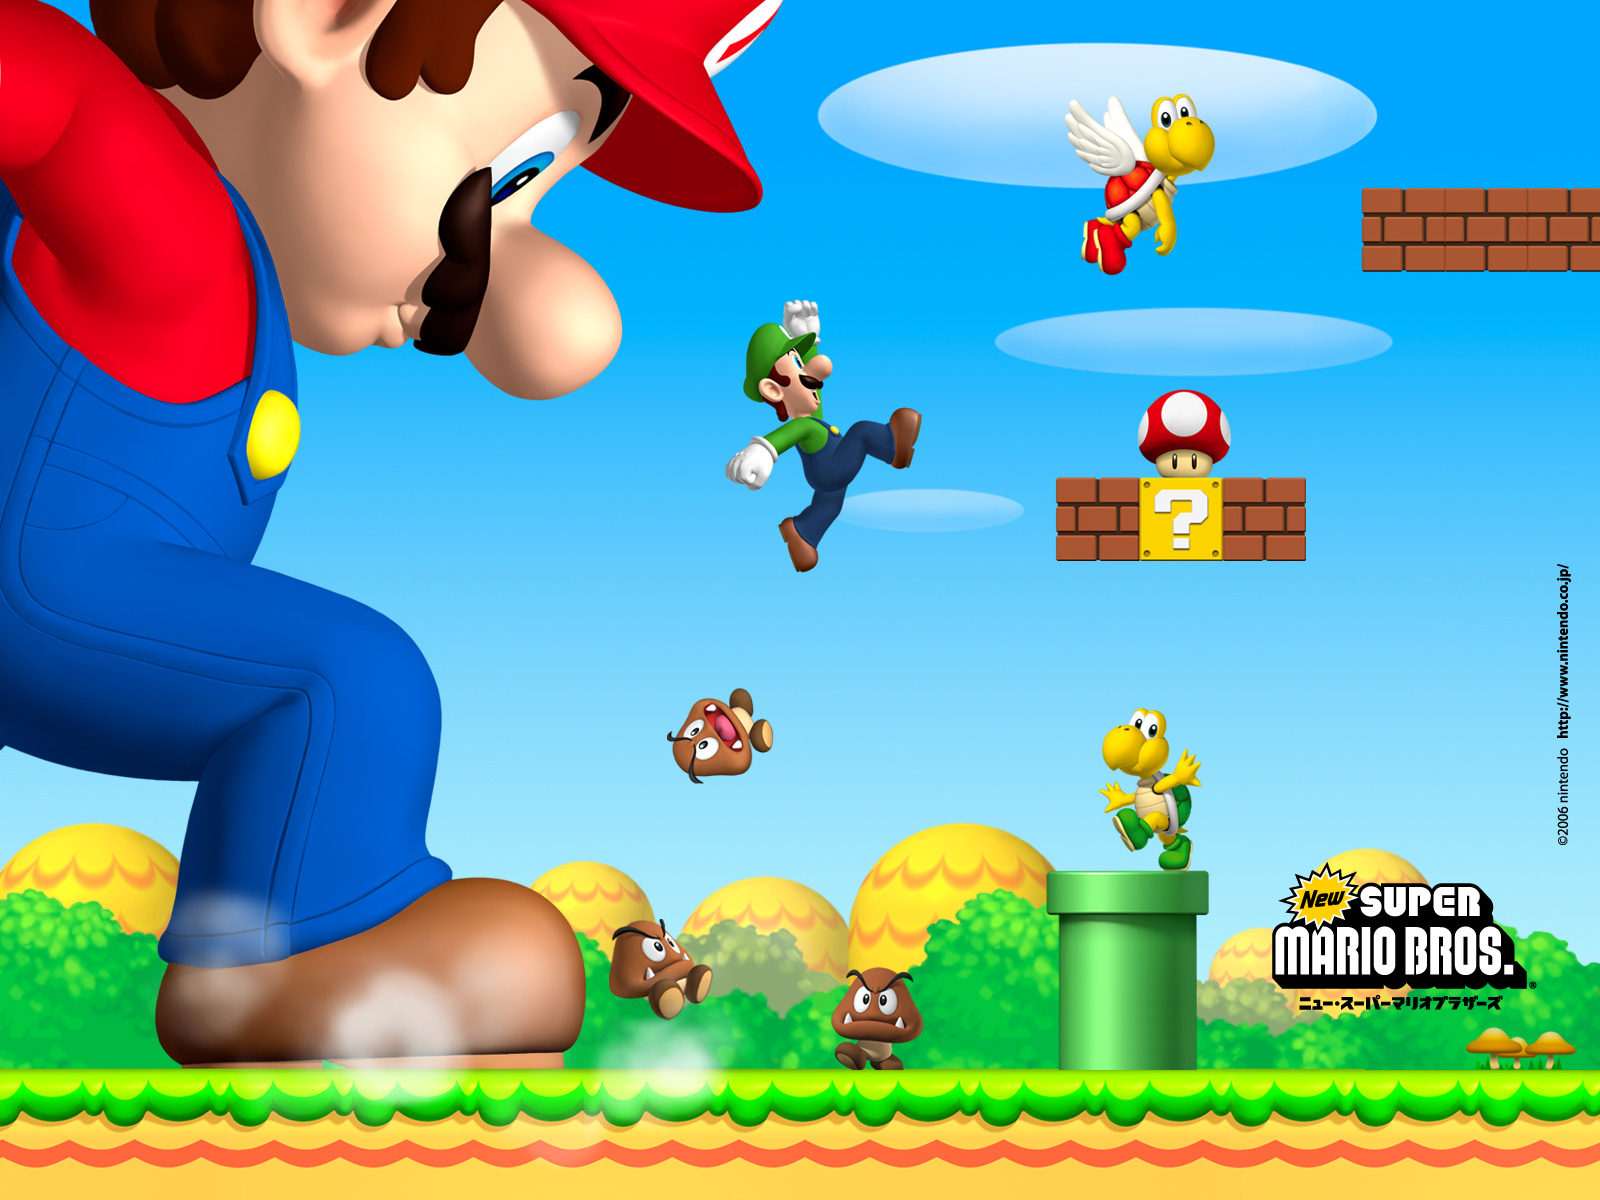 Tmk Downloads Images Wallpaper New Super Mario Bros Nds